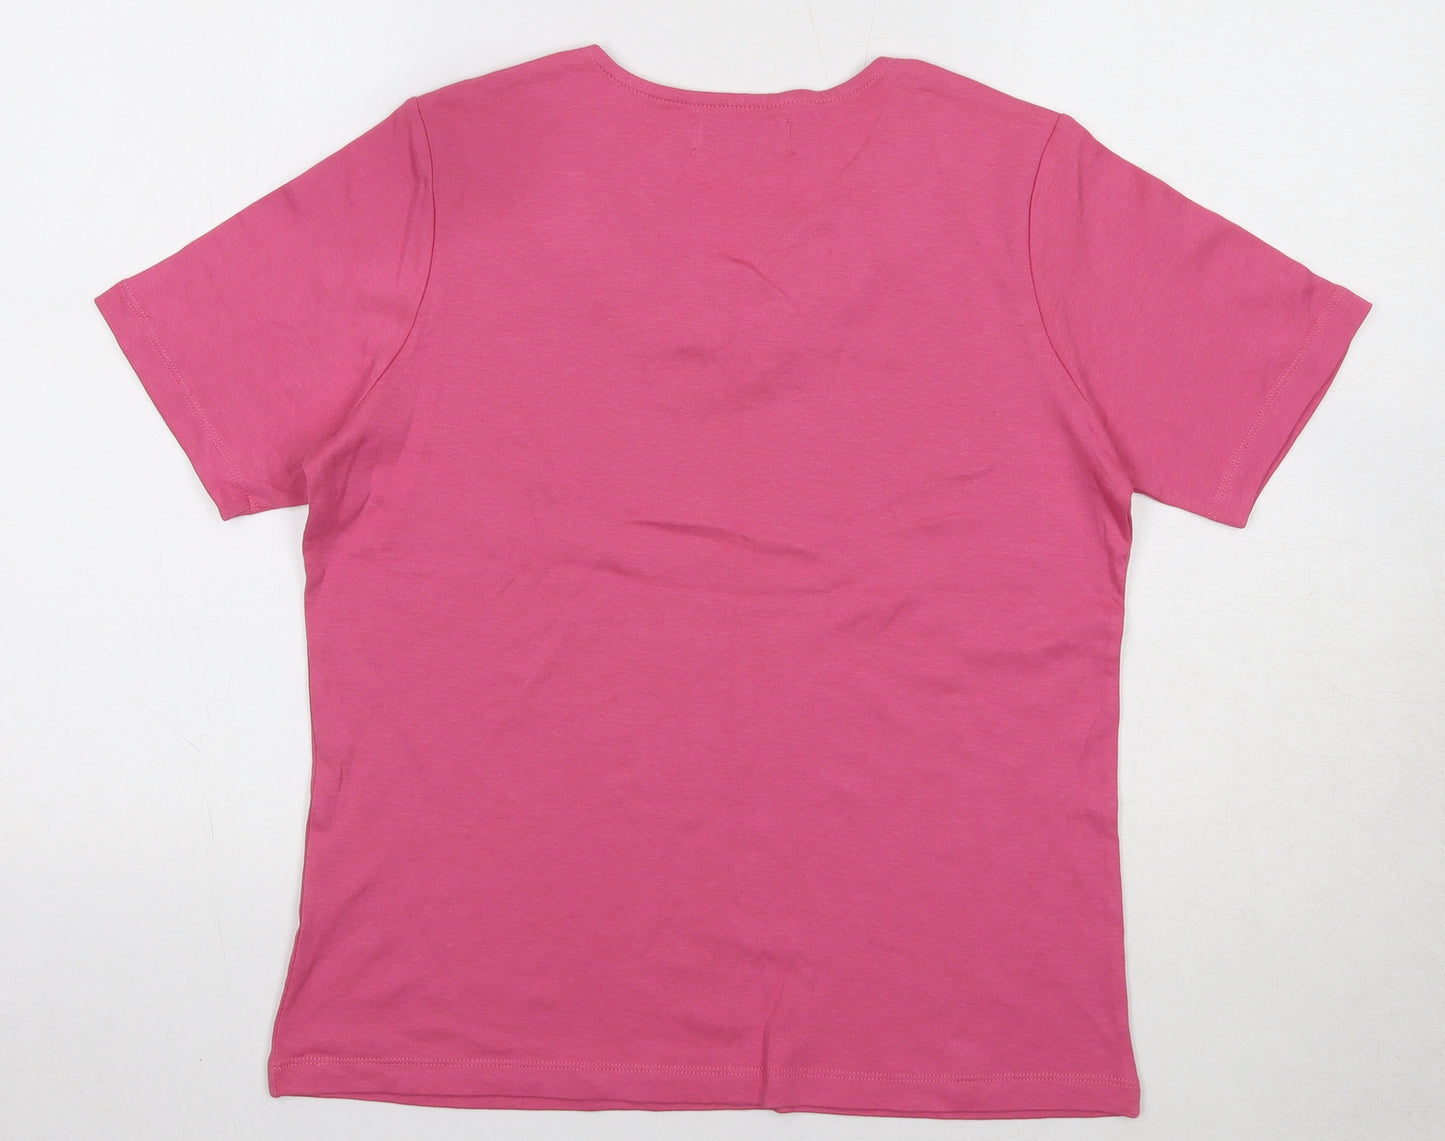 HONOR MILLBURN Womens Pink Cotton Basic T-Shirt Size 10 V-Neck